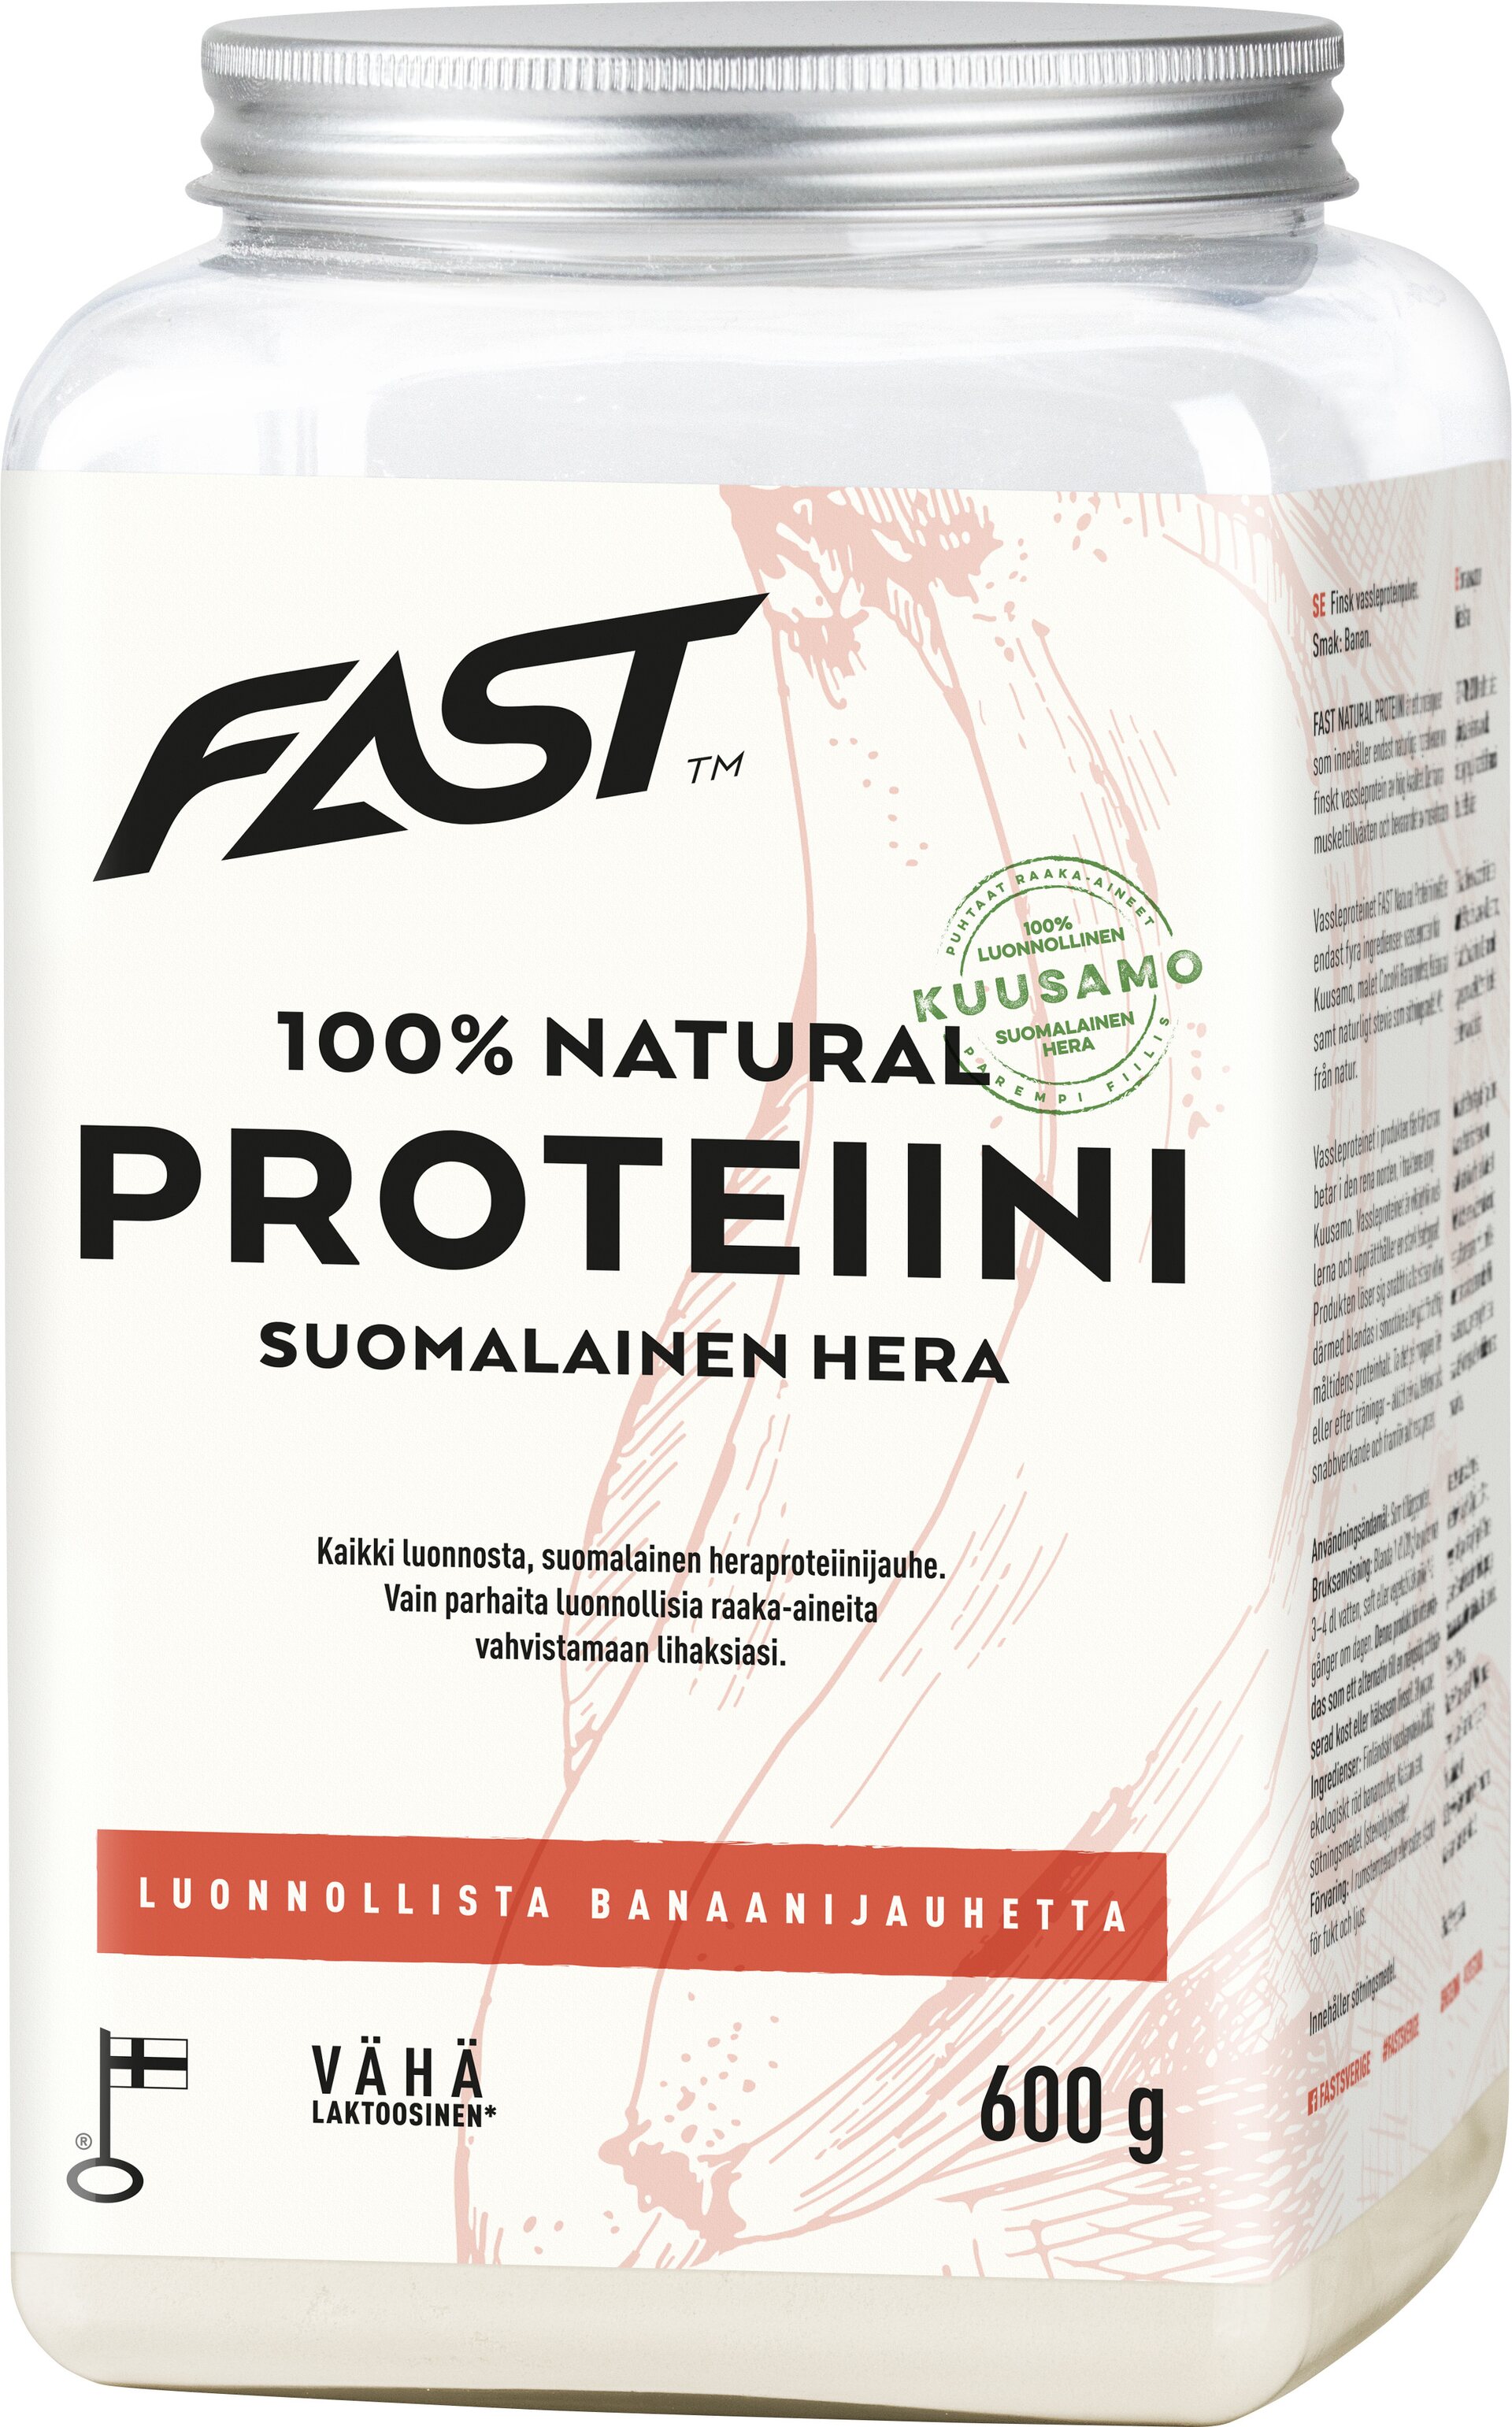 Фаст 100. Протеин naturel Bio. Hera proteiini. Скока ппротыина на 600мл.